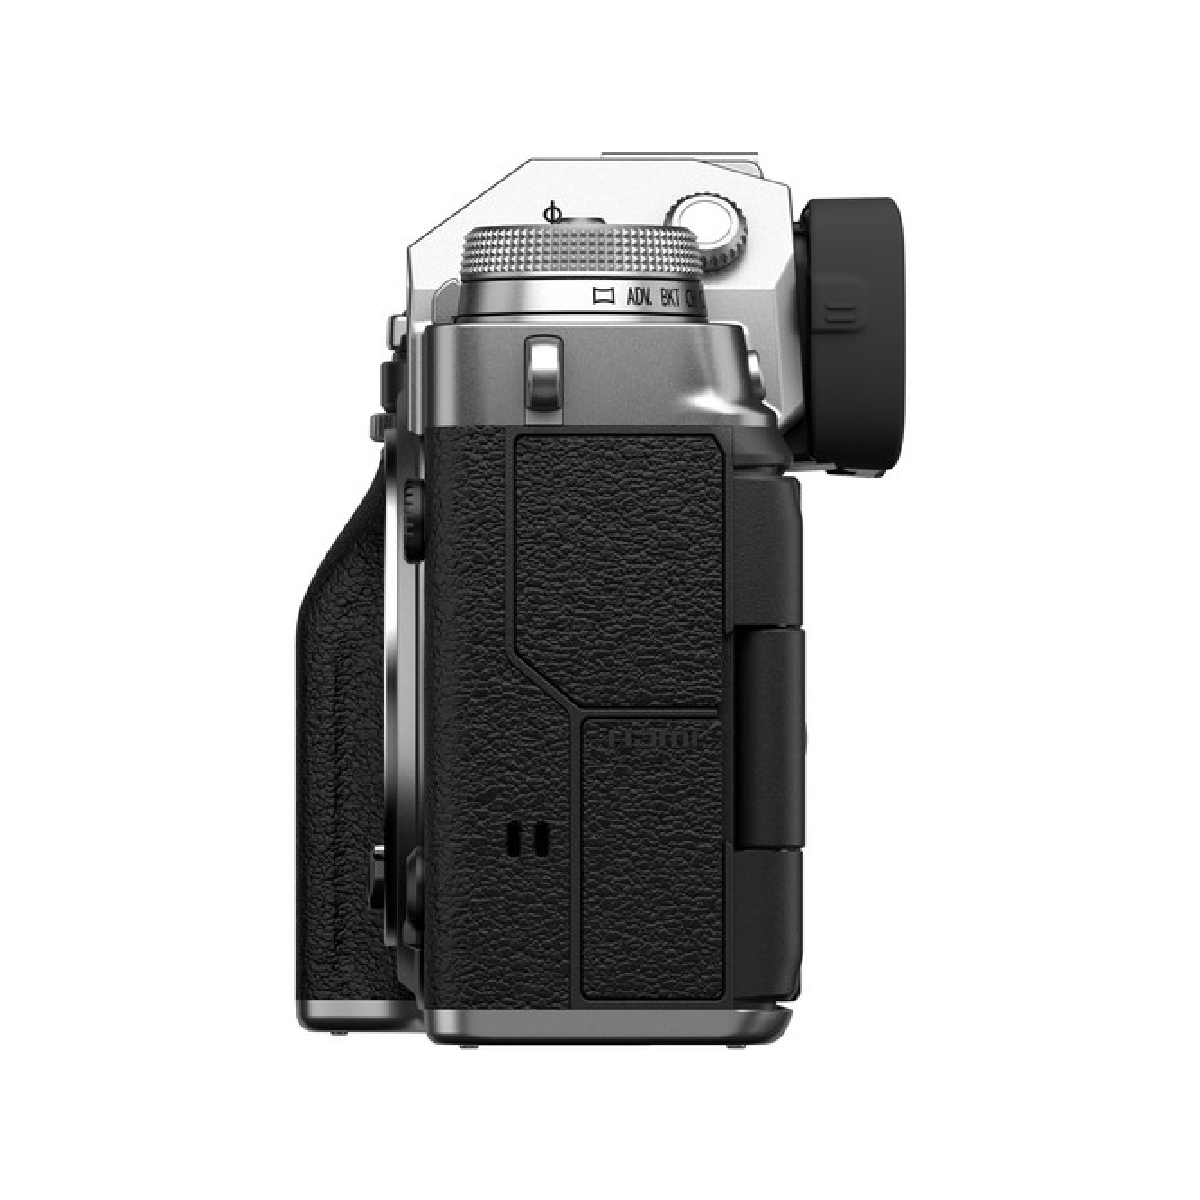 Fujifilm X-T4 26 MP Mirrorless Camera Body – Silver (2)